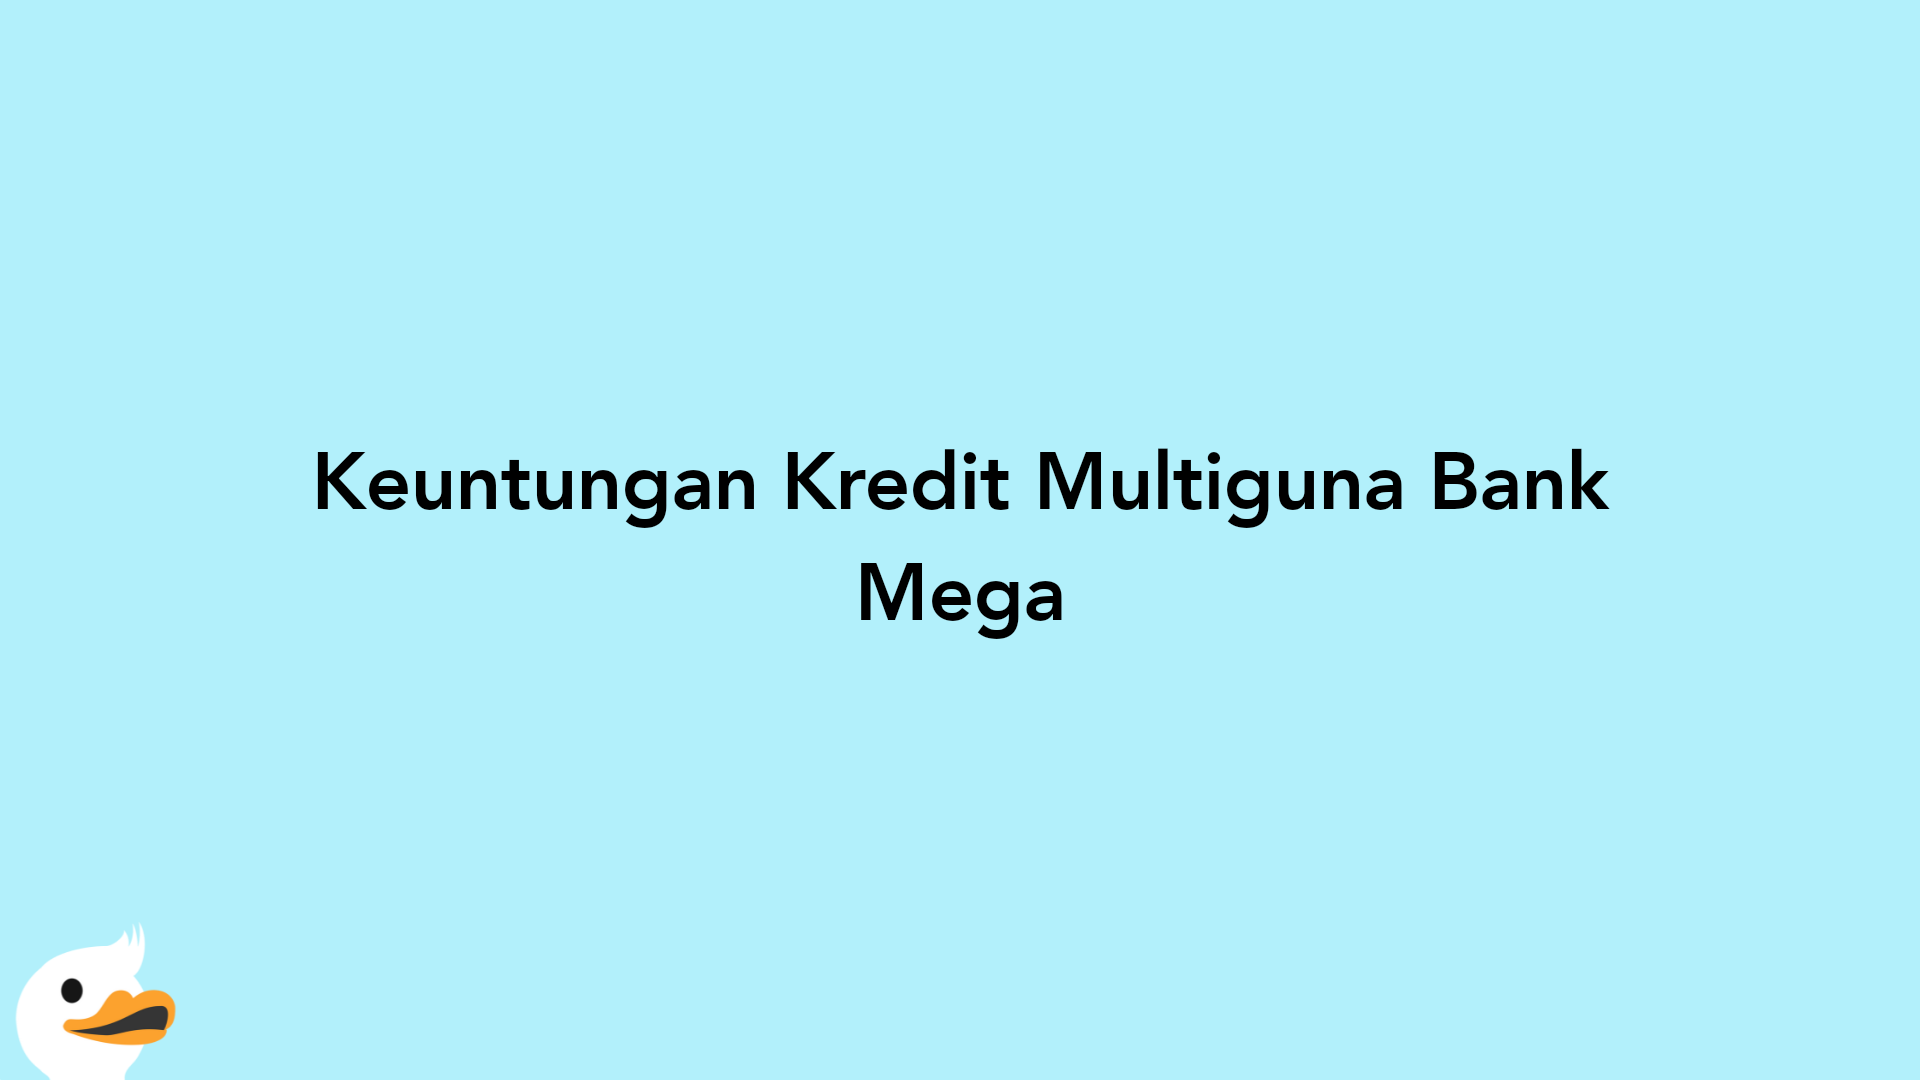 Keuntungan Kredit Multiguna Bank Mega